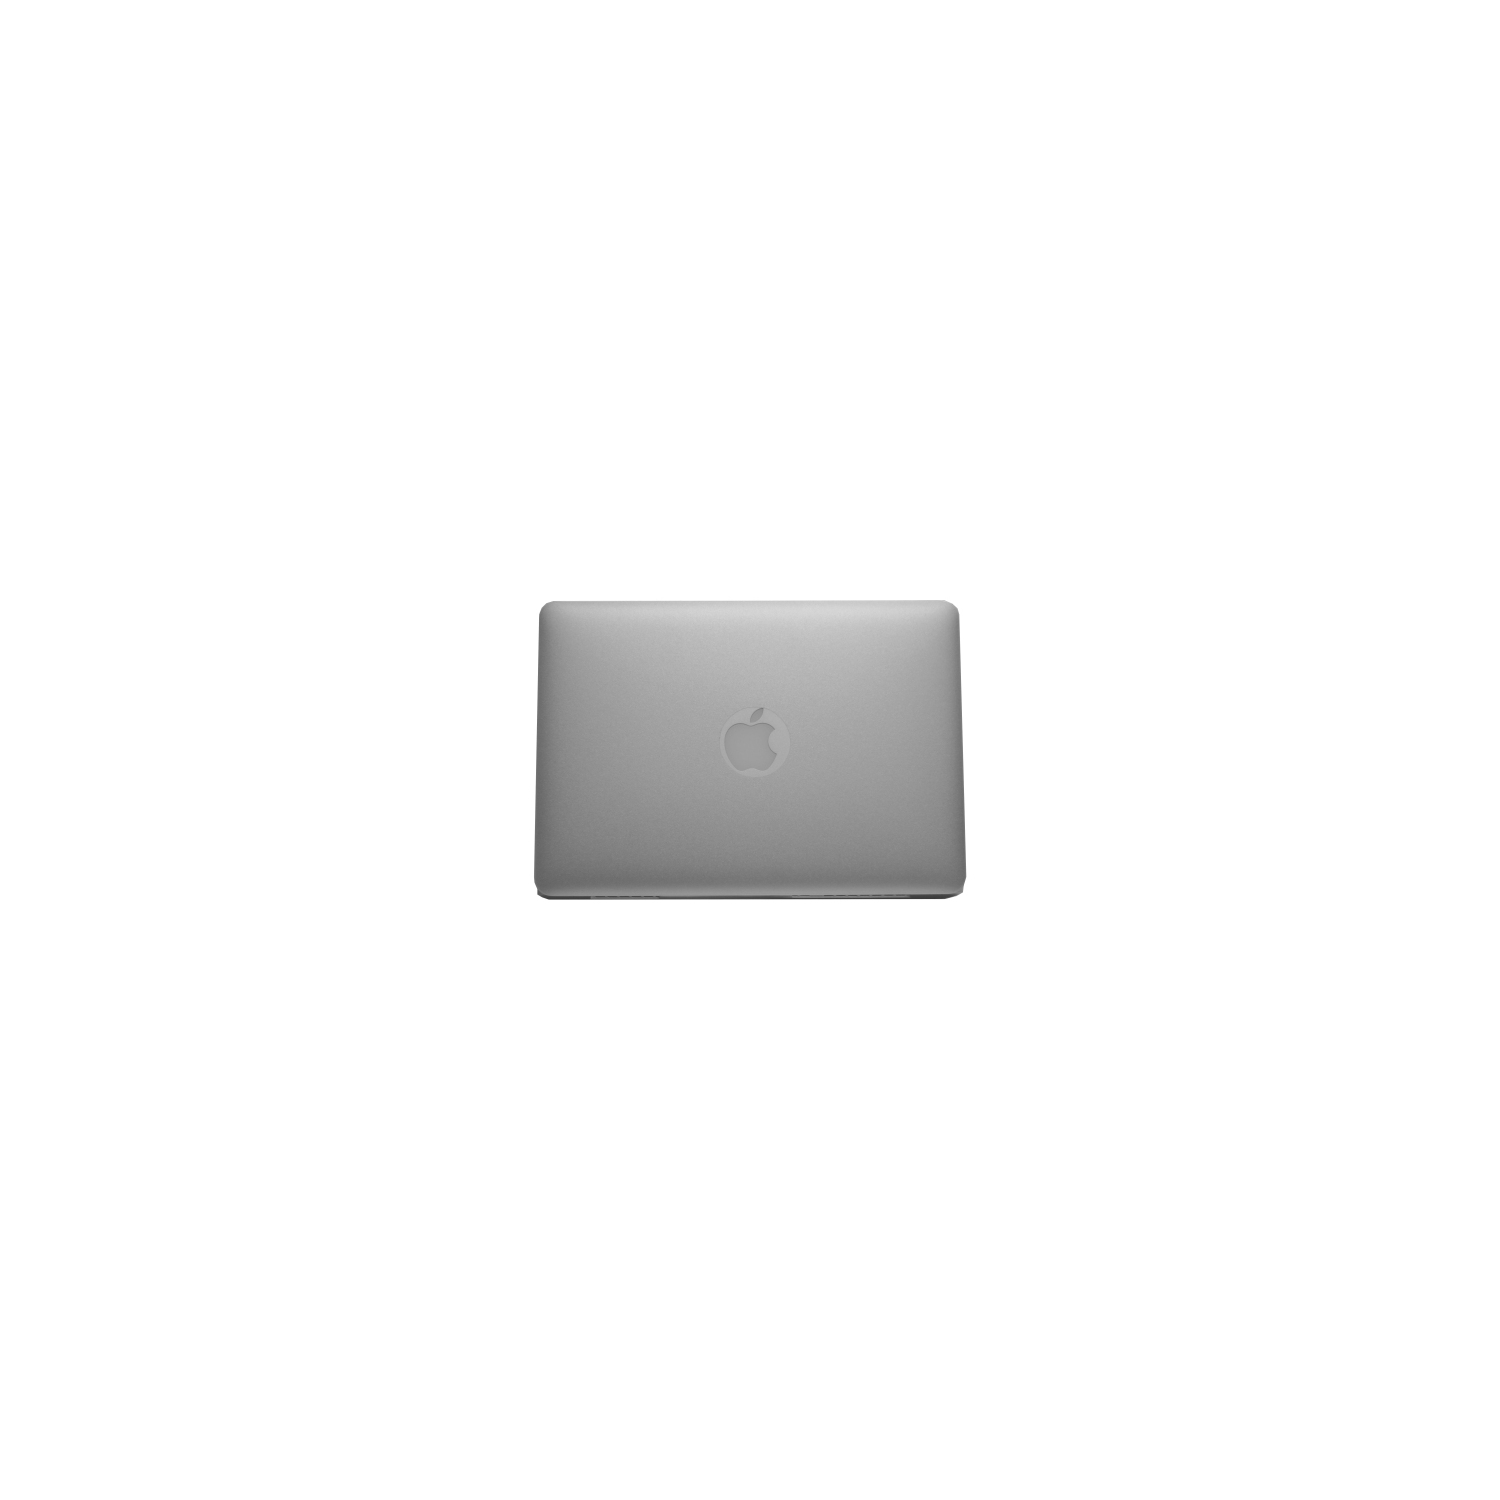 Refurbished (Excellent) - Apple Macbook Pro 15.4" Retina - Intel Core i7 2.5GHz / 16GB RAM / 512GB SSD - A1398 / MJLT2LL/A (Mid 2015)